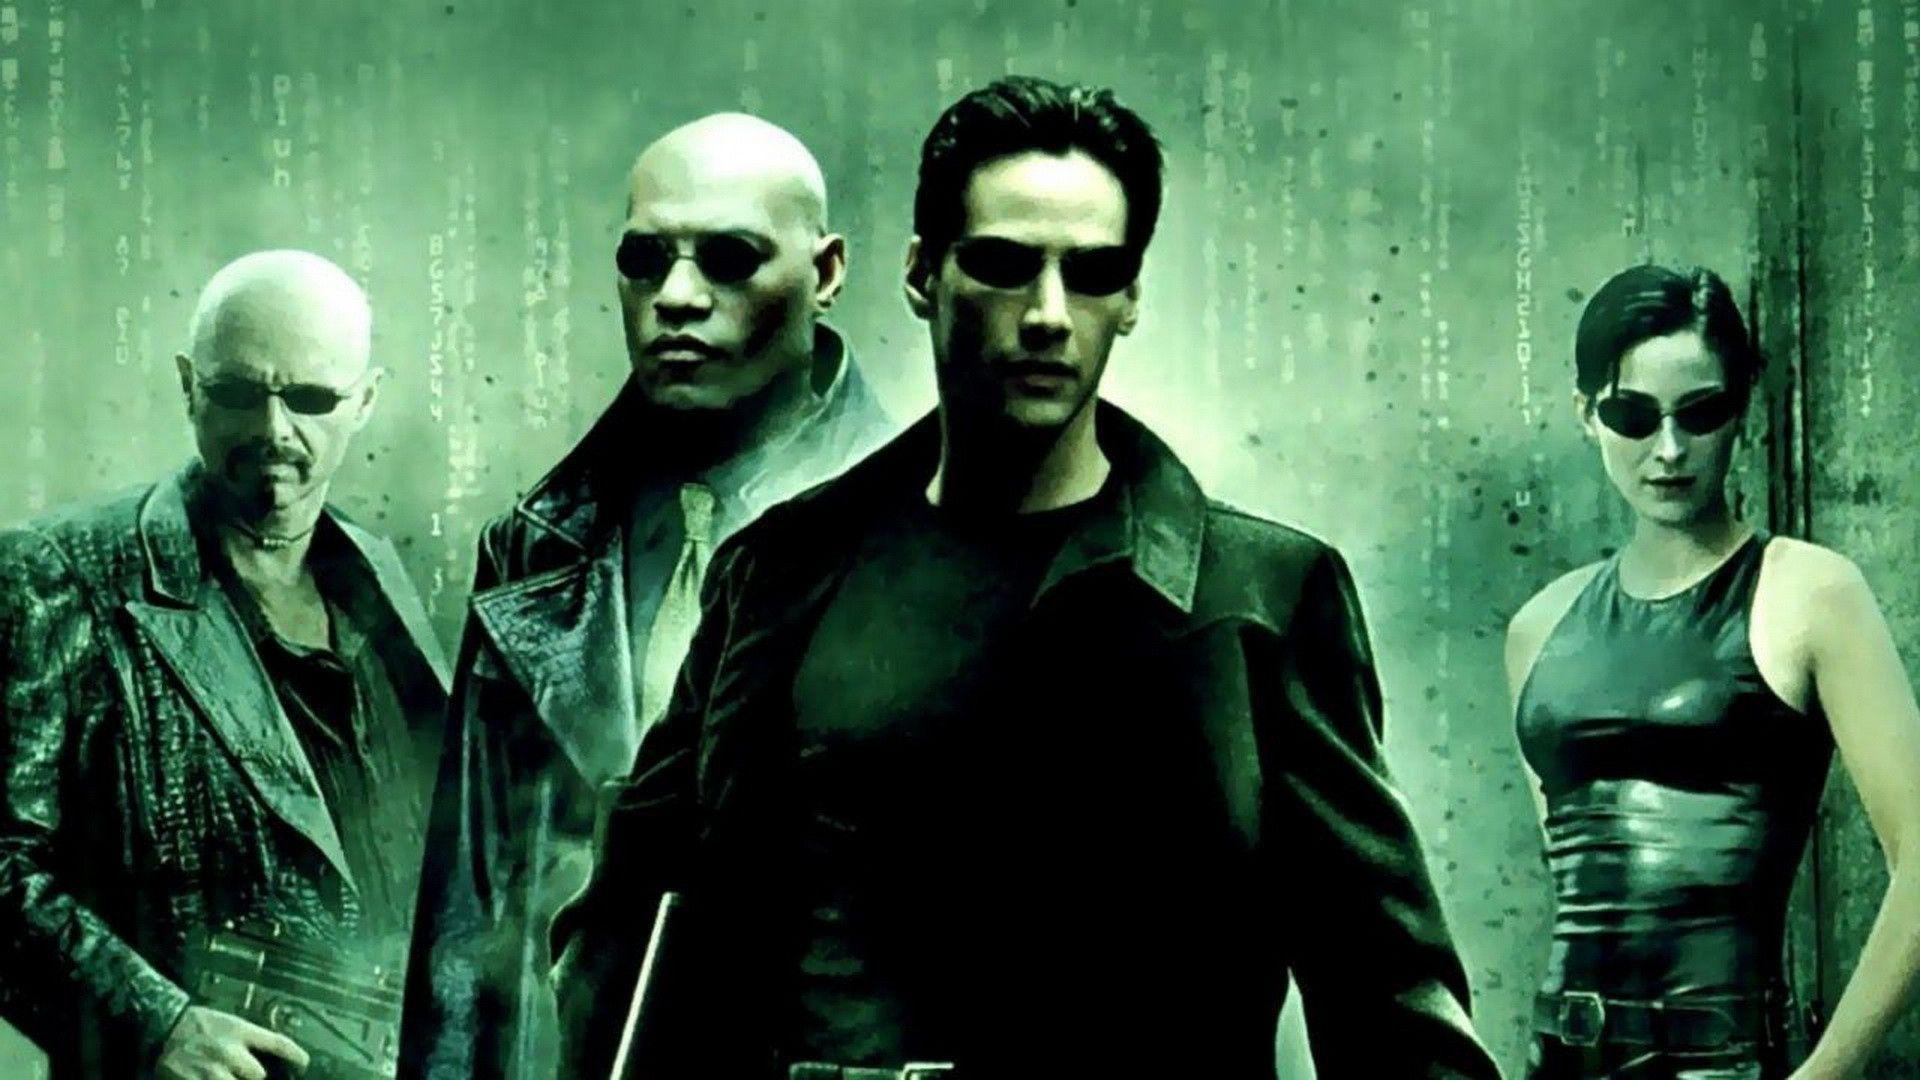 Matrix Movie Wallpapers - Top Free Matrix Movie Backgrounds -  WallpaperAccess